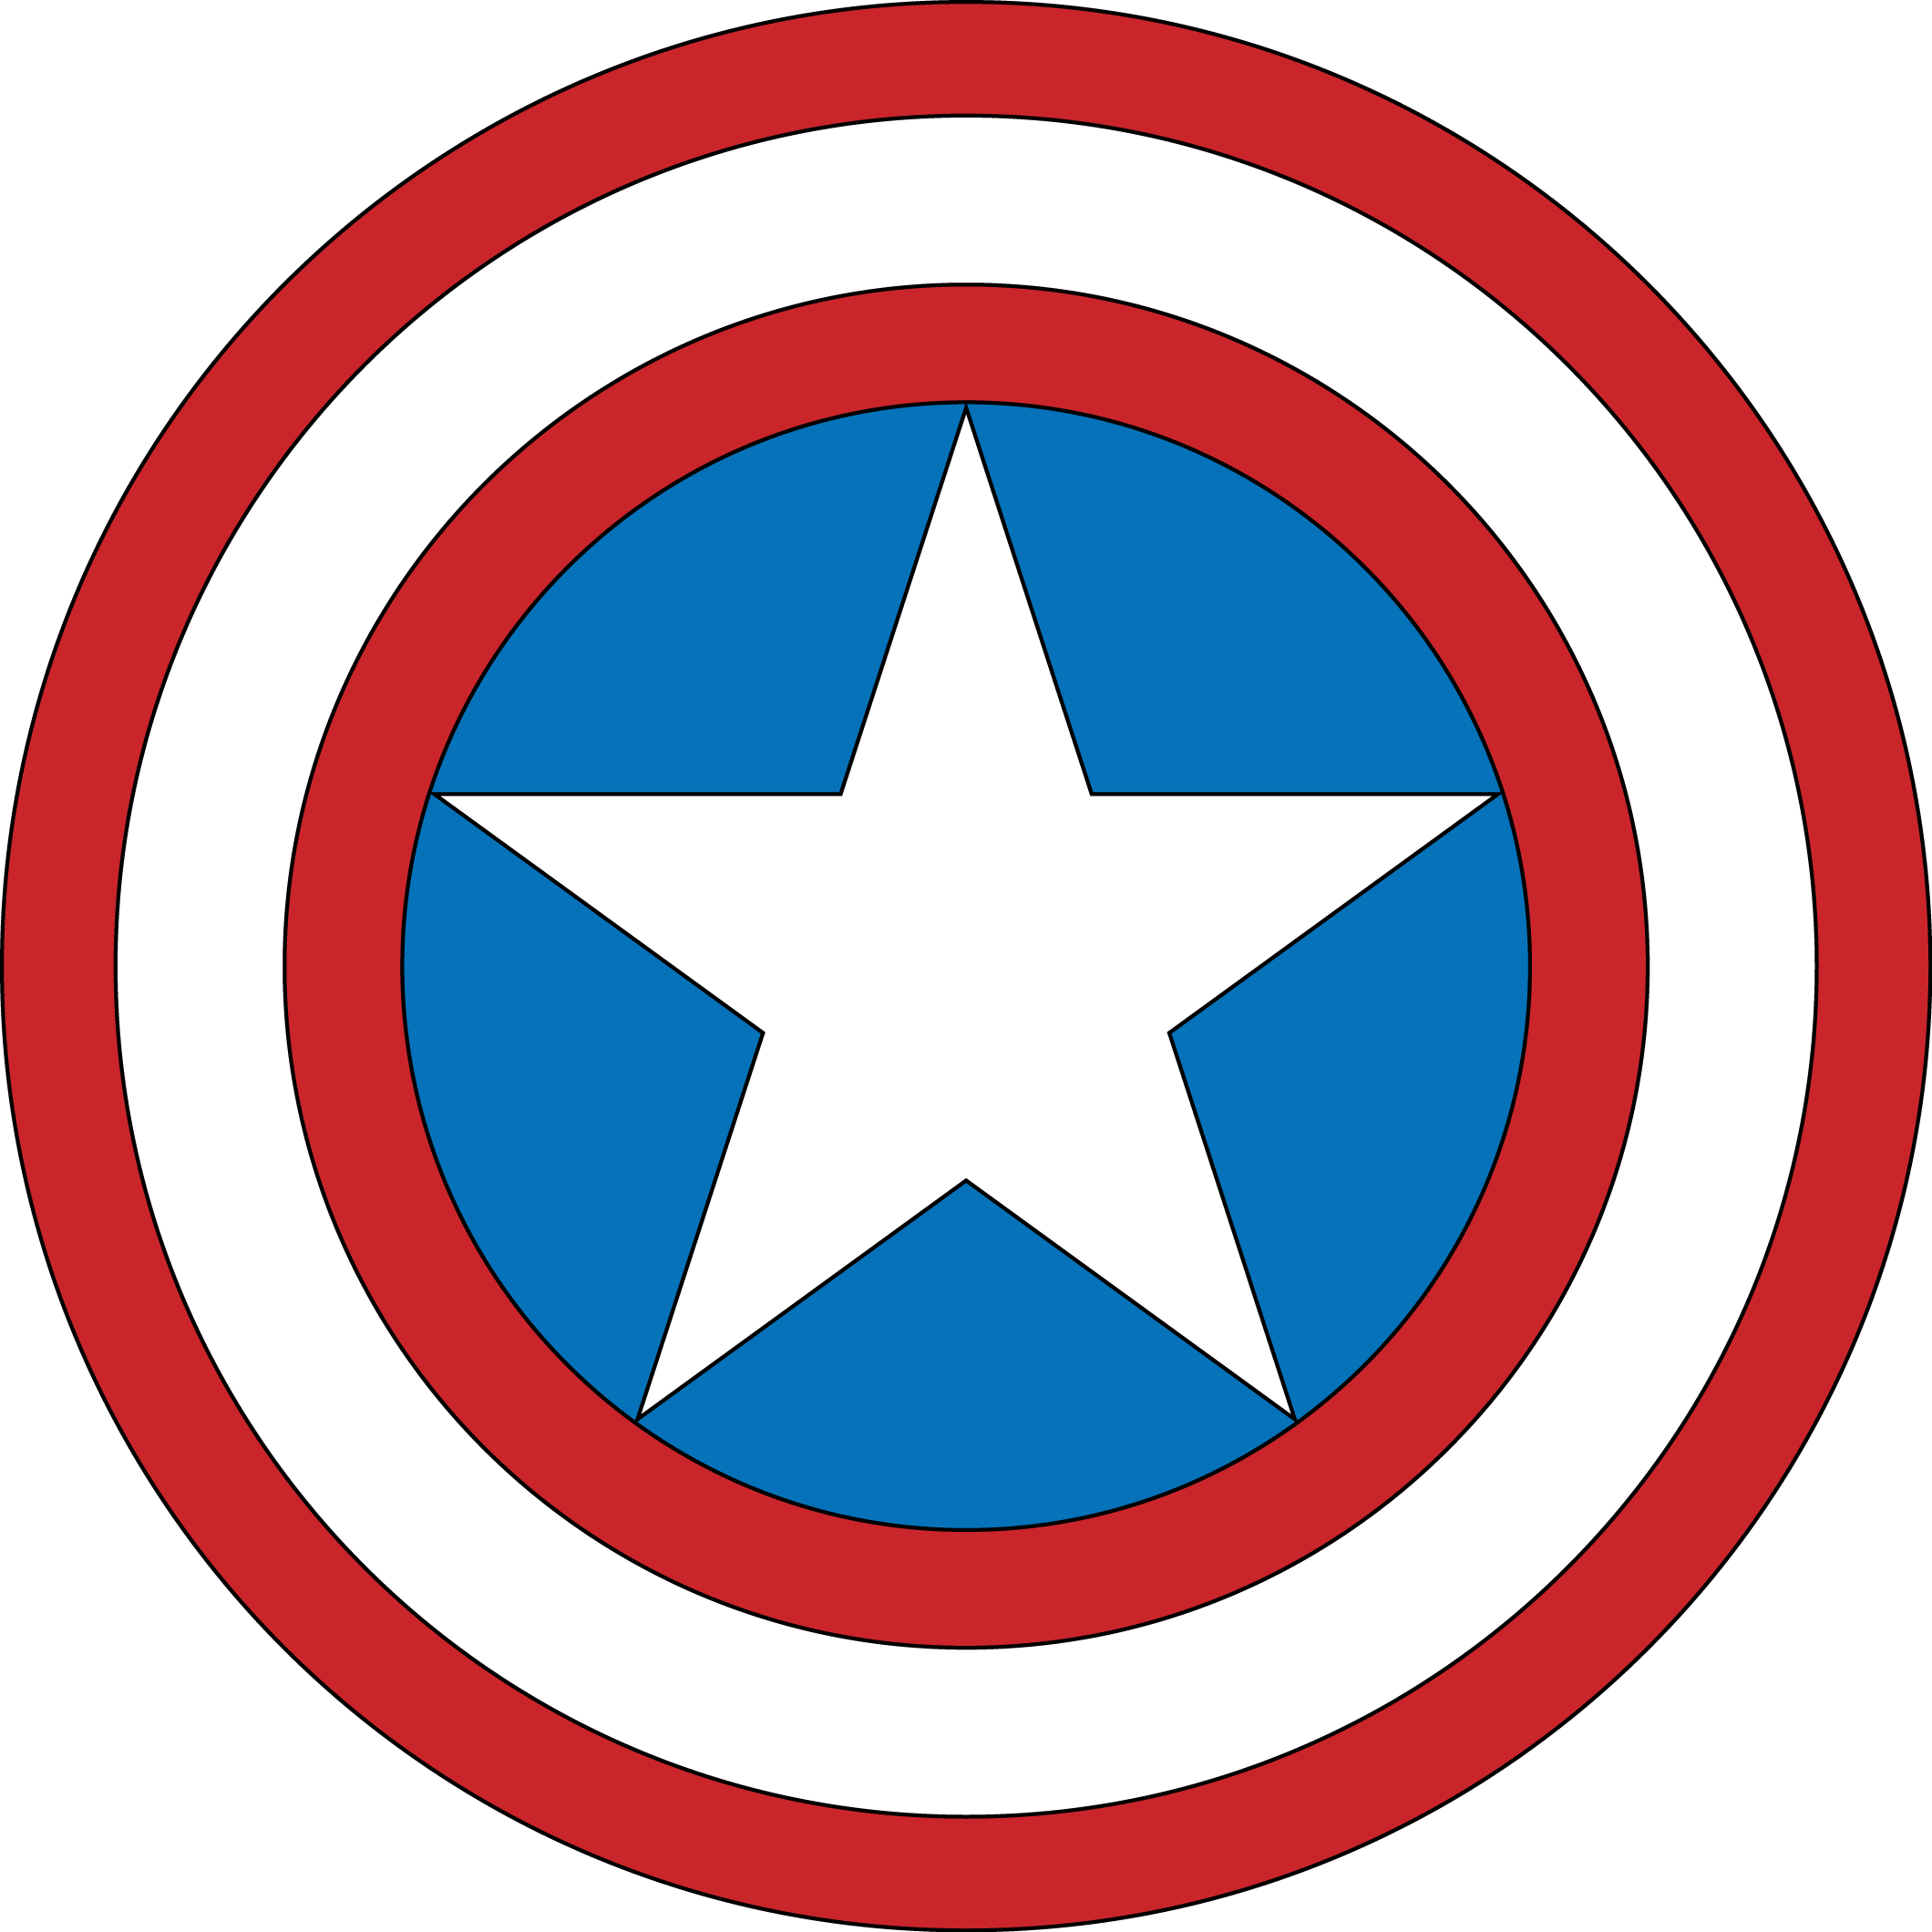 captain america logo | Logospike.com: Famous and Free Vector Logos